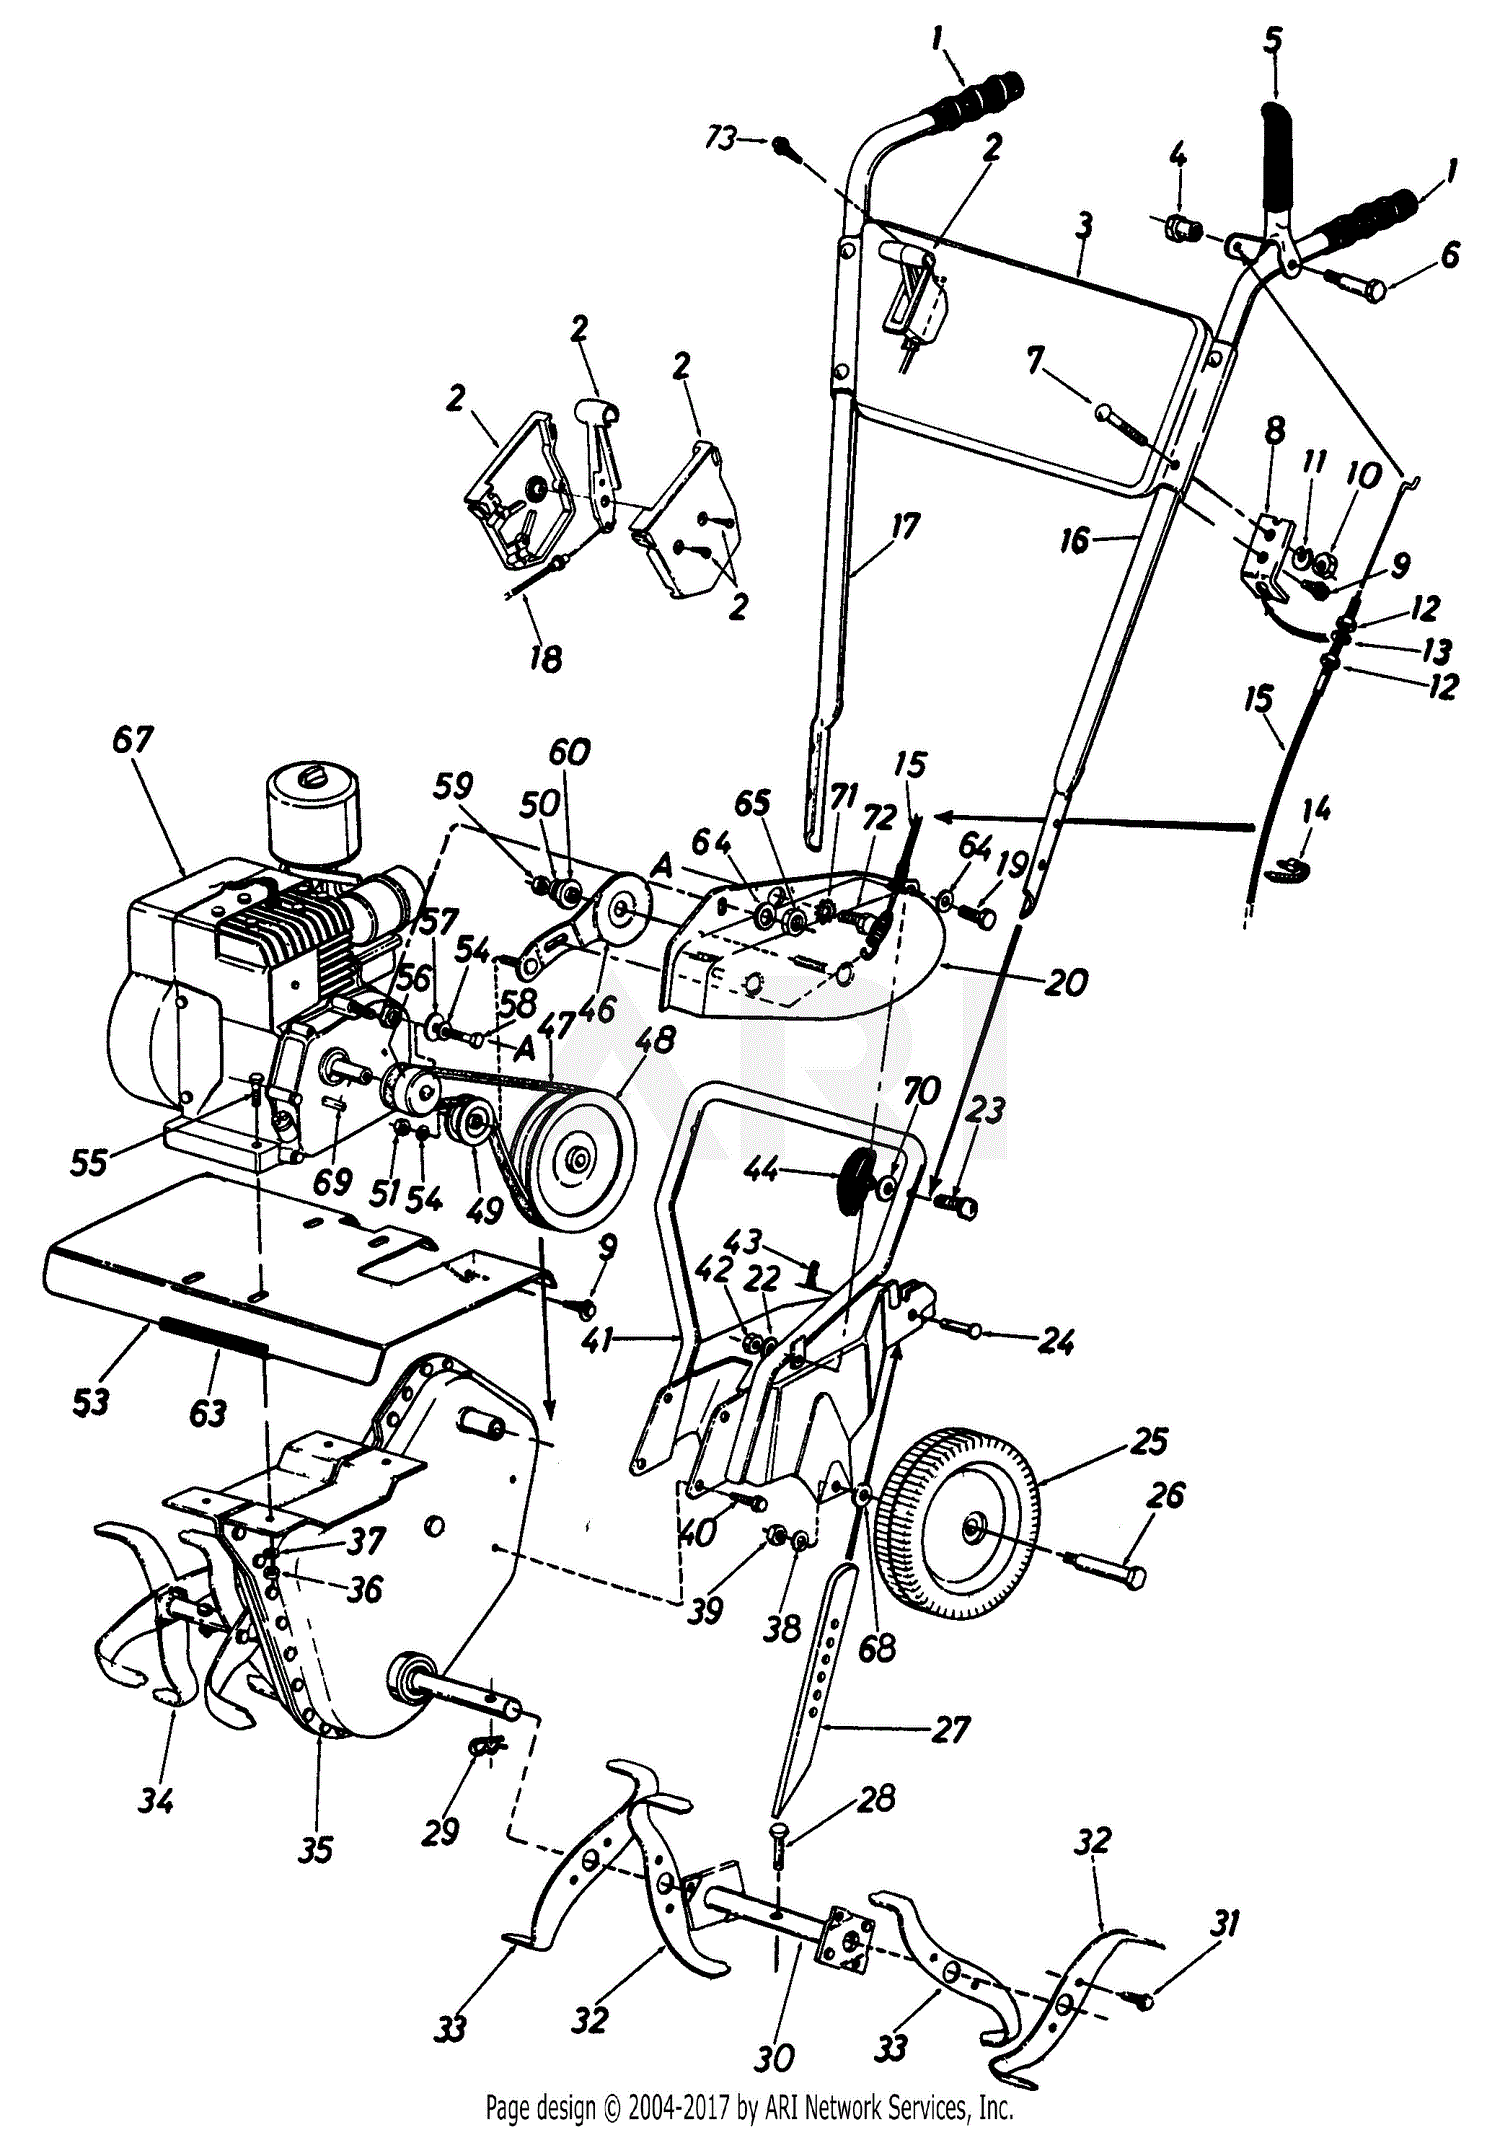 MTD 245-596-190 2 HP Edger (1985) Parts Diagram for Edger Assembly